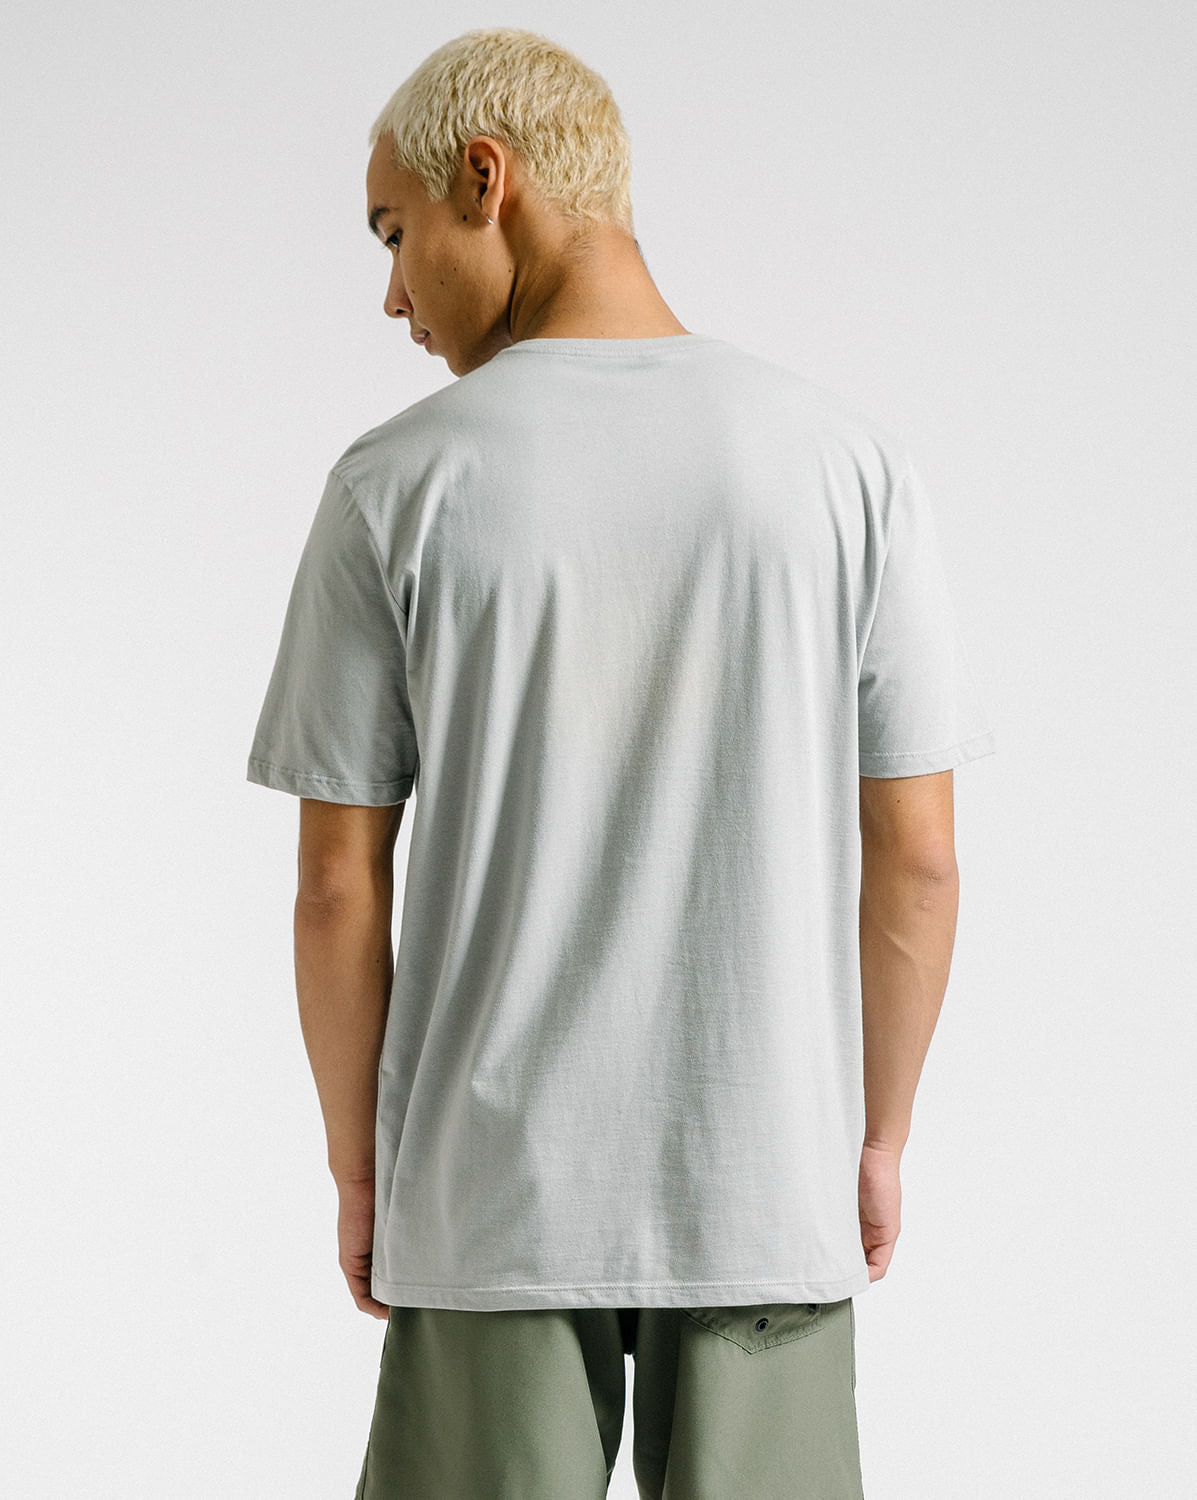 Camiseta Volcom Regular Section Cinza